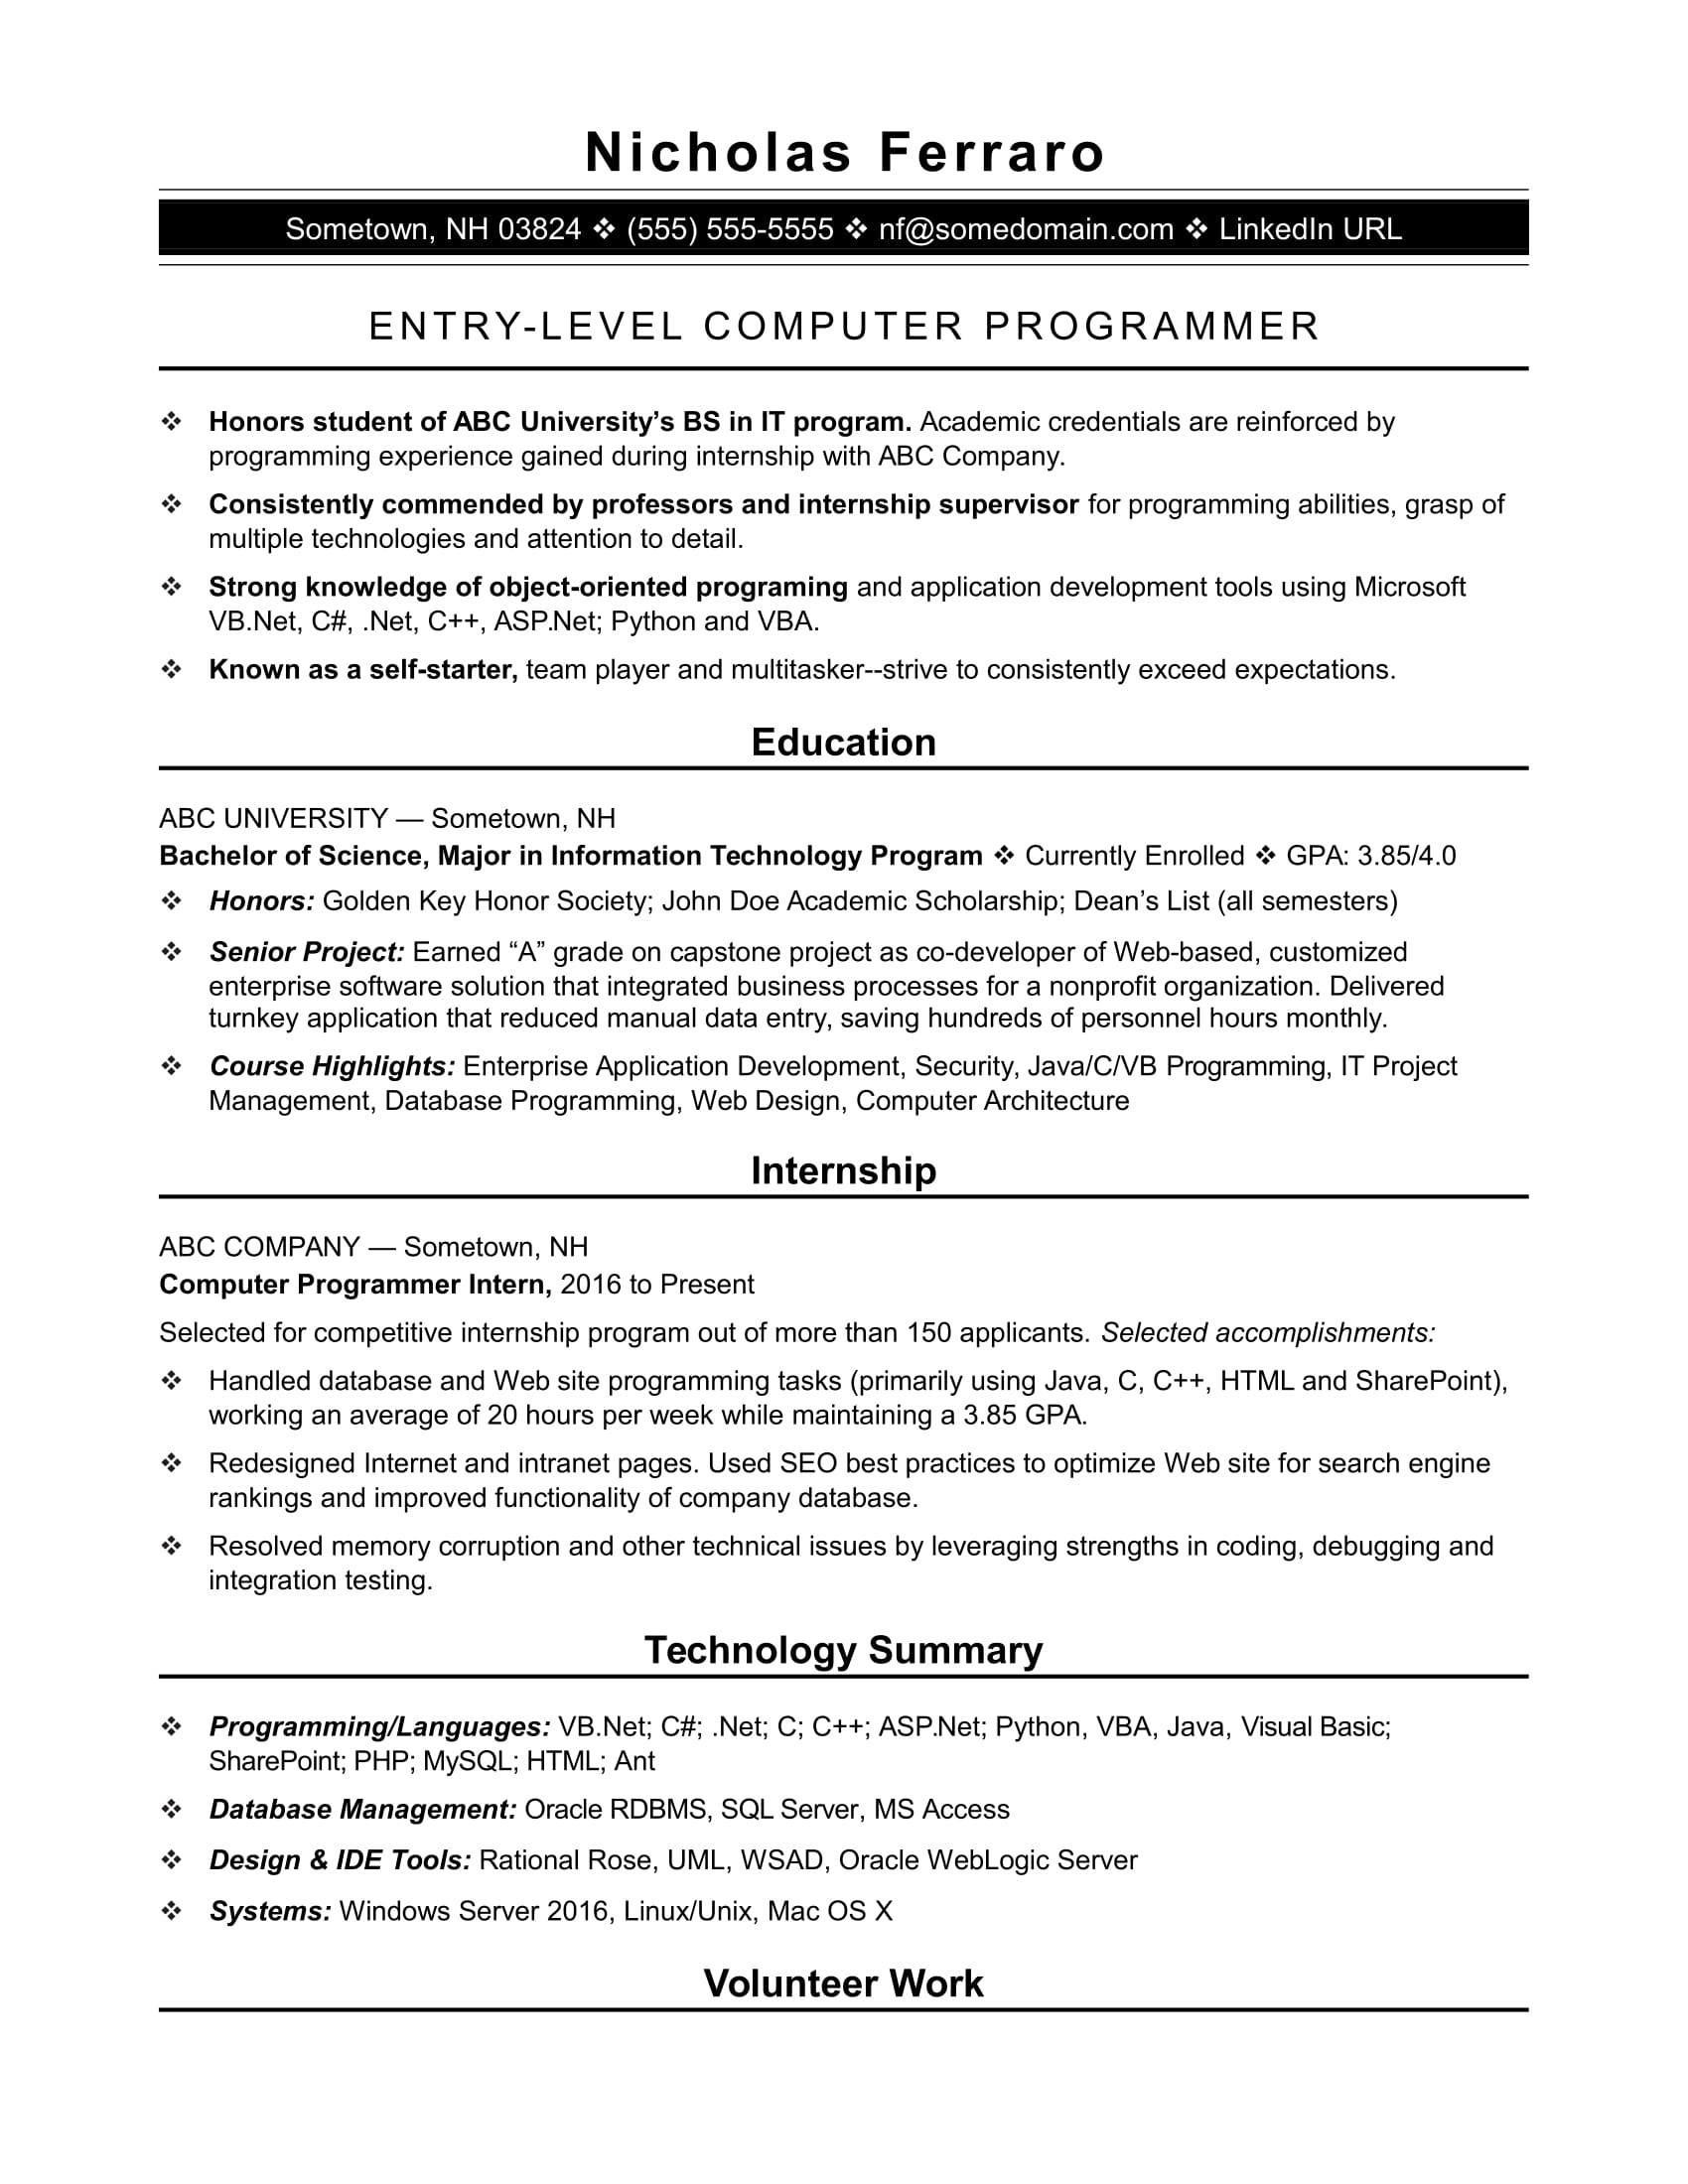 Sample Computer Science Resume Entry Level Entry-level Programmer Resume Monster.com